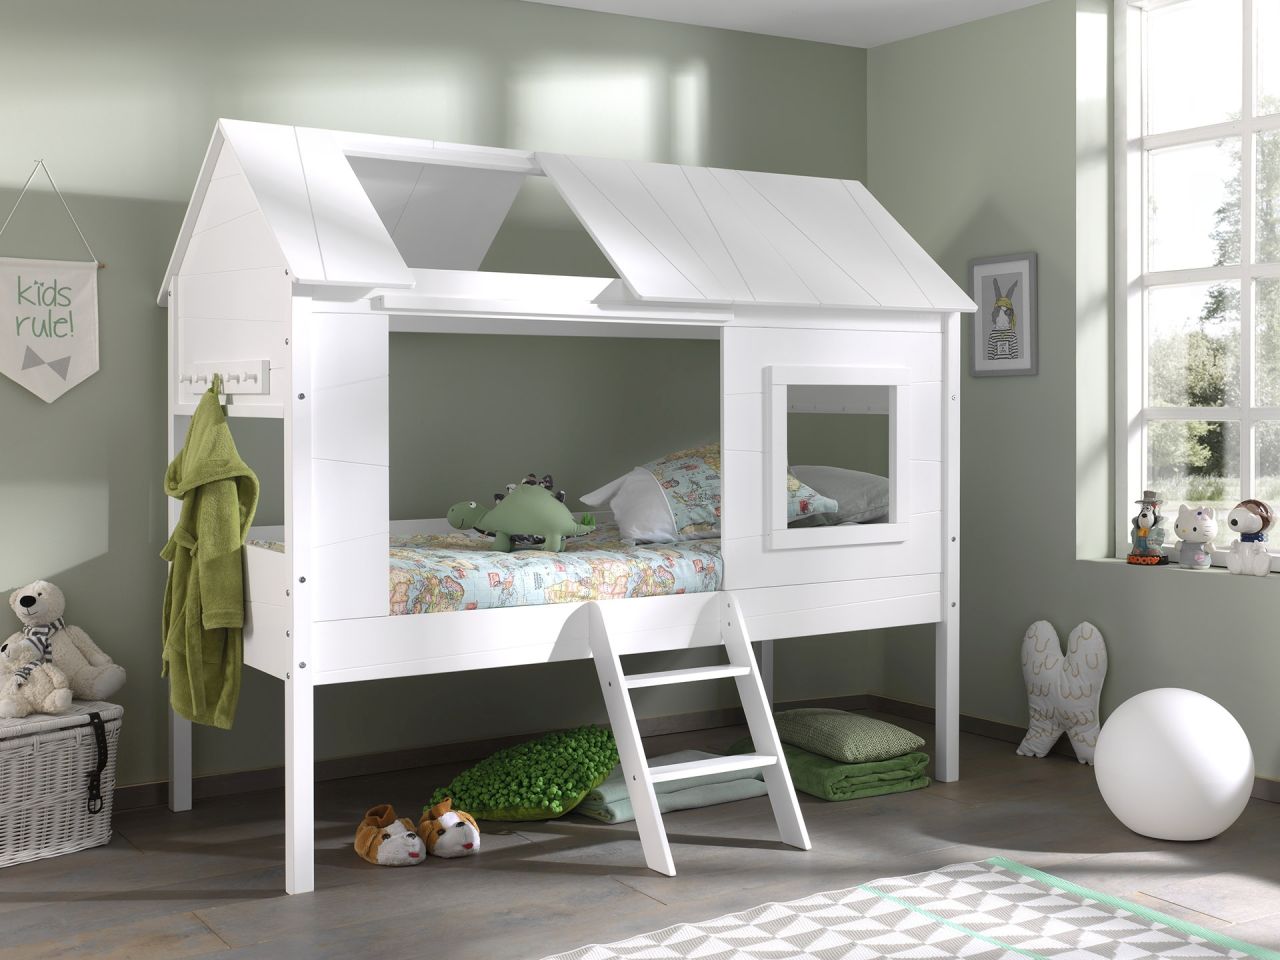 Set Baumhaus Bett Hausbett 90×200 Kinderbett Kindermöbel Rolllattenrost Weiß